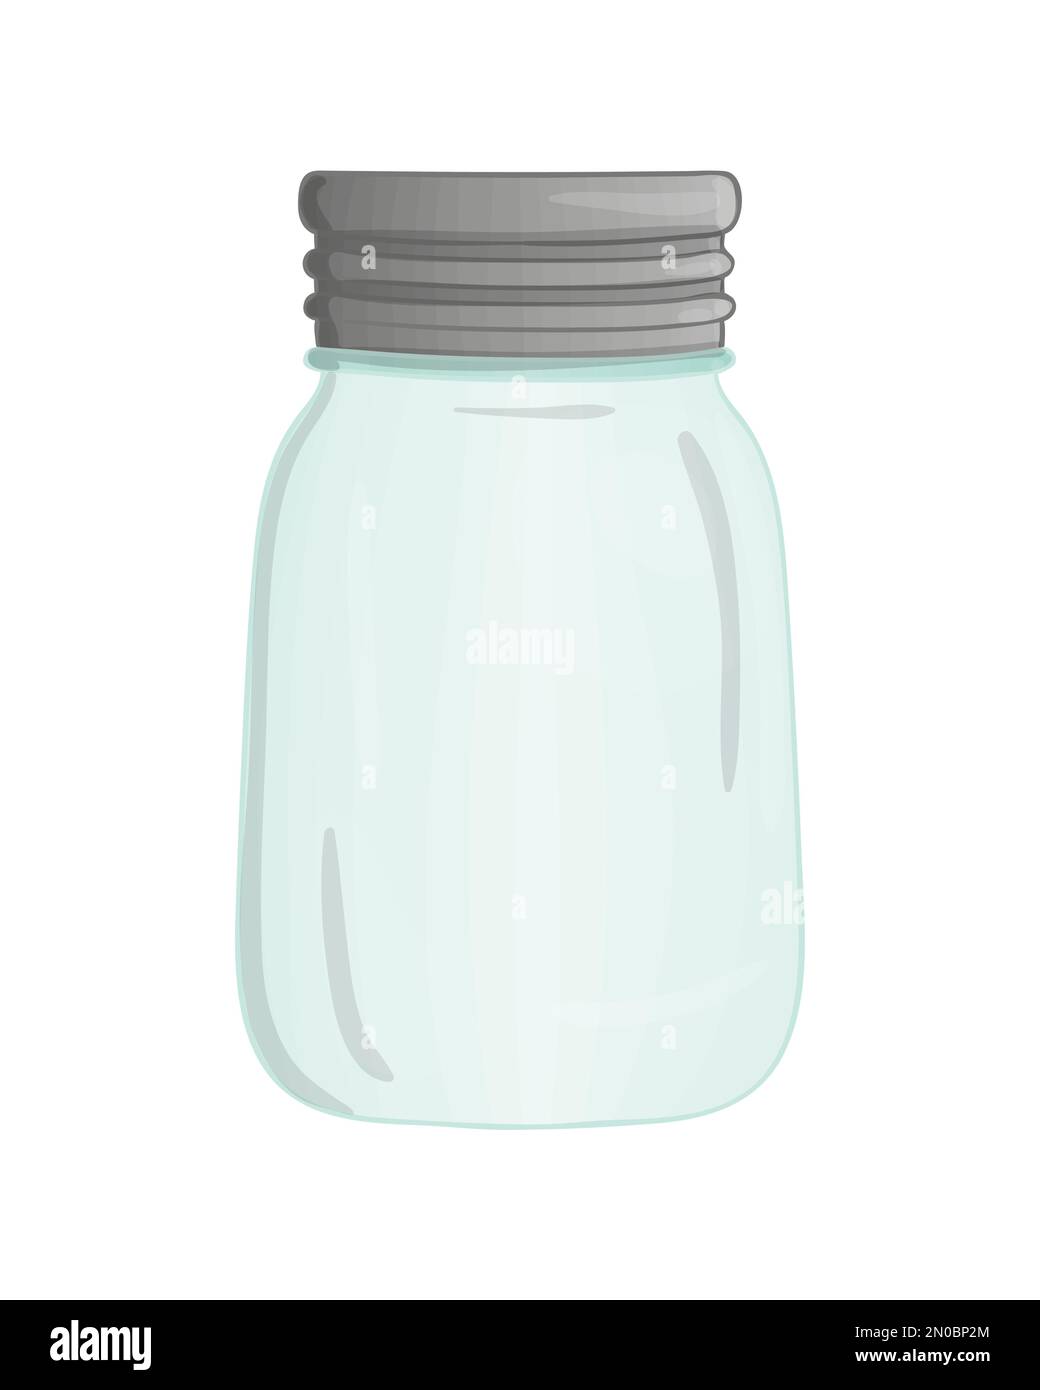 Vector glass jar icon. Cute pot watercolor style illustration. Stock Vector